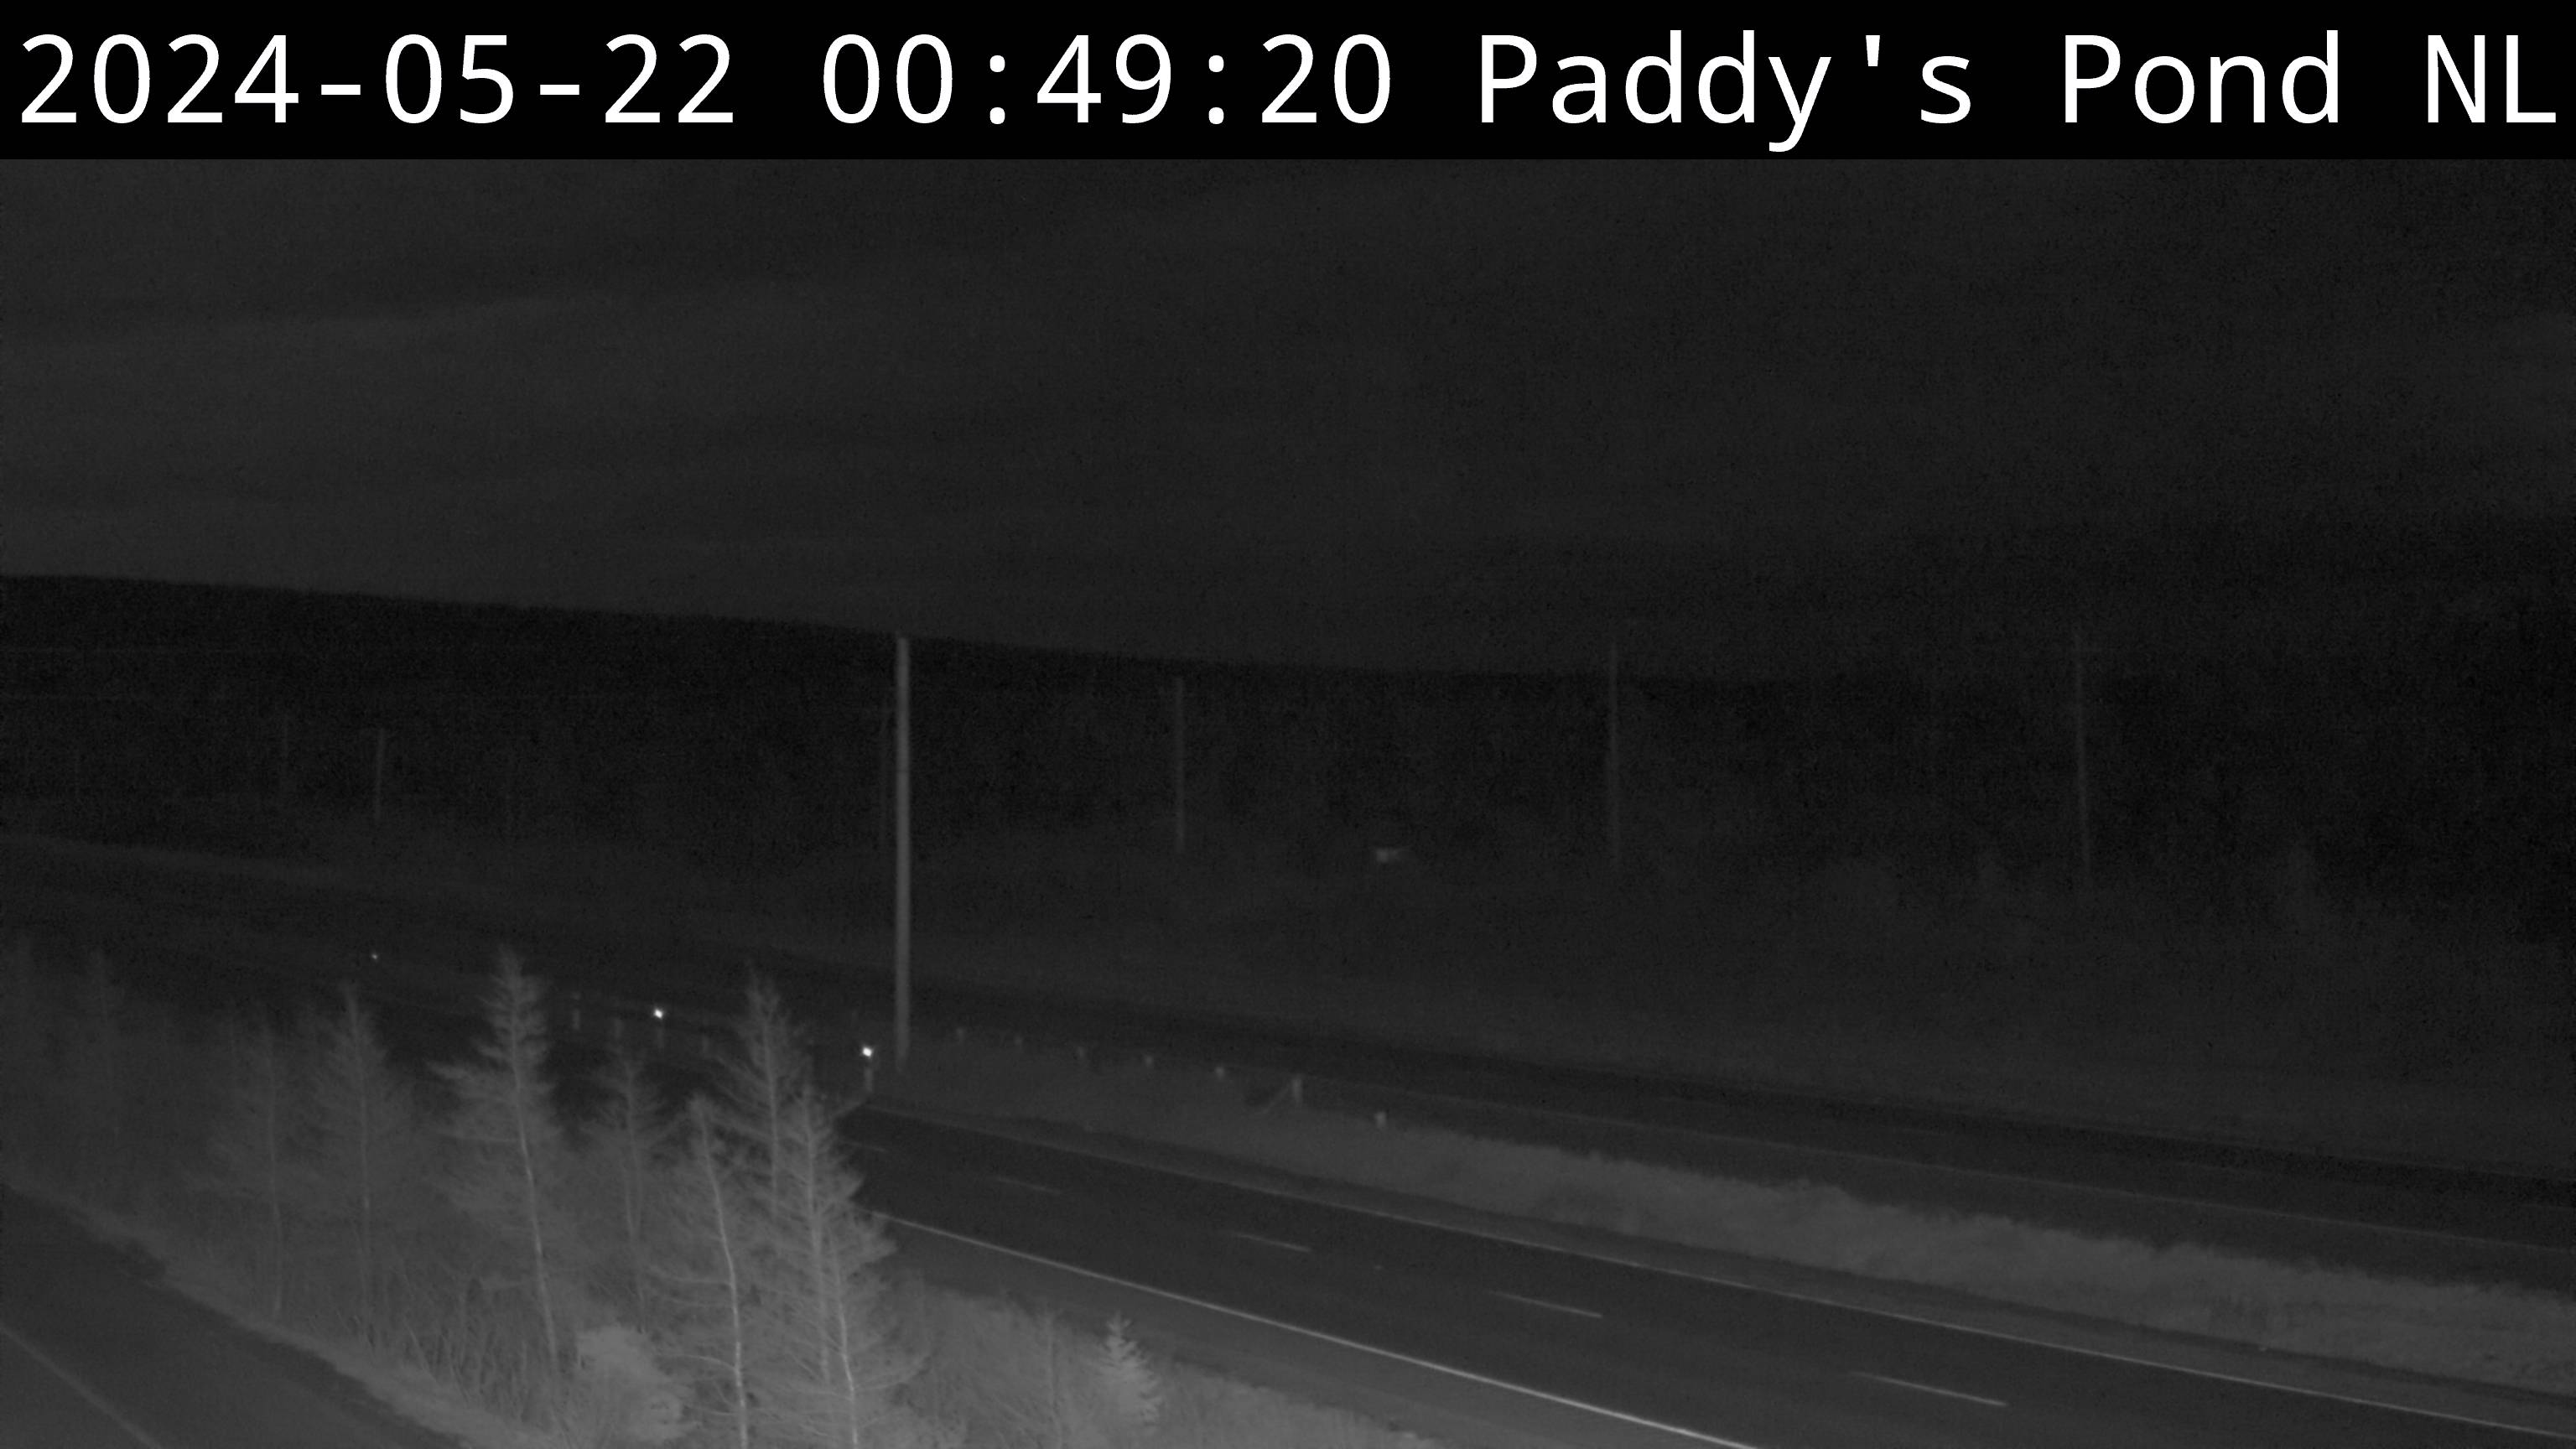 Paddy's Pond Live Camera Image